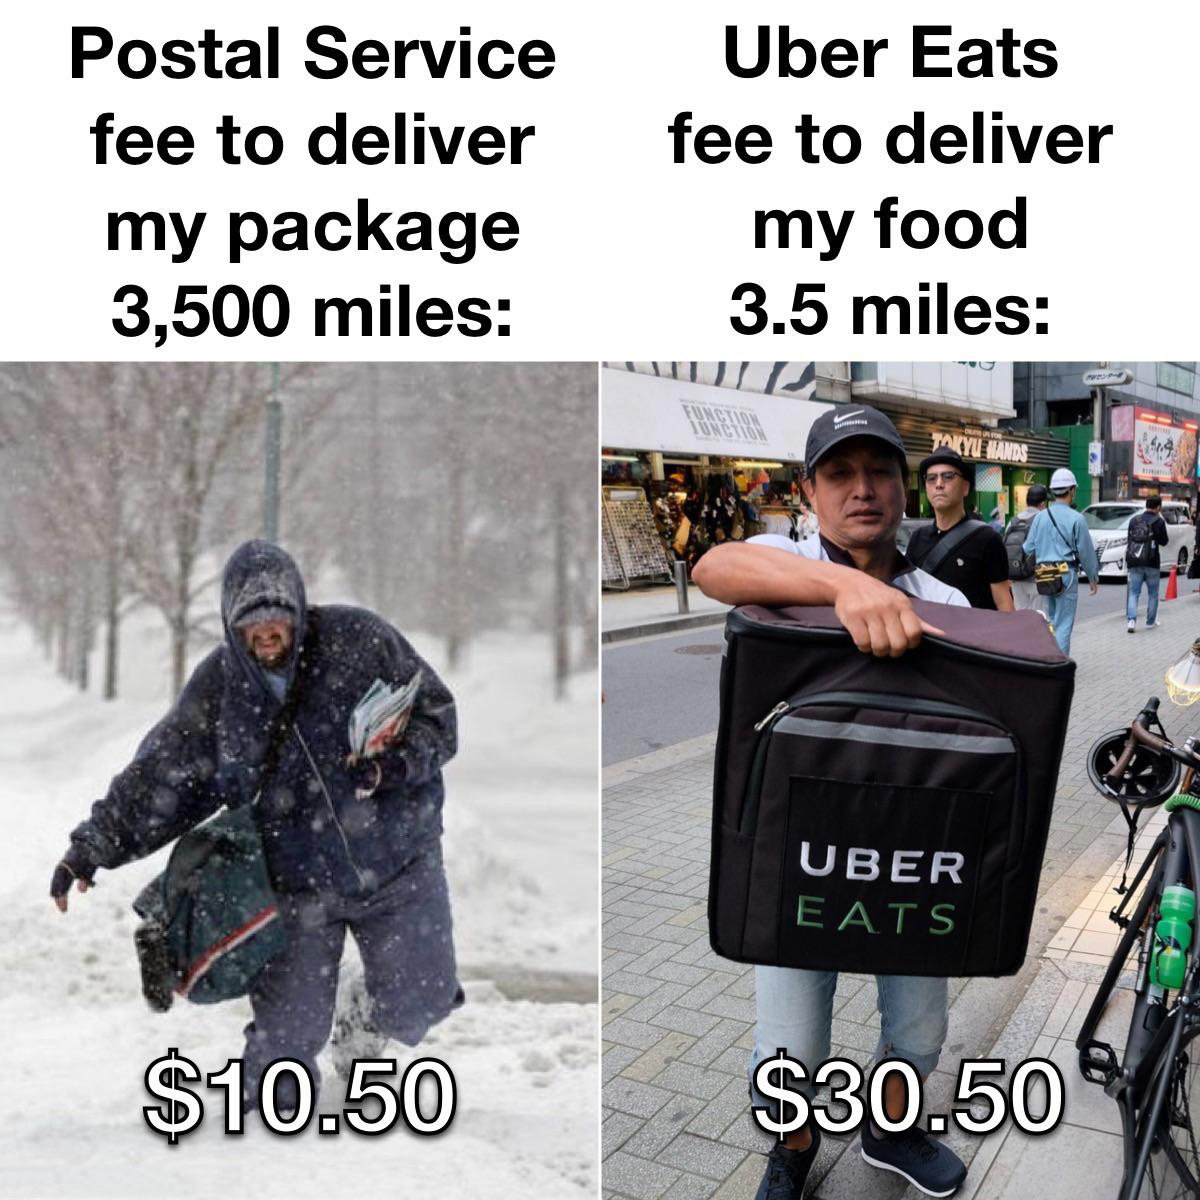 dank memes --  Internet meme - Postal Service fee to deliver my package 3,500 miles $10.50 Uber Eats fee to deliver my food 3.5 miles Parys Garde Uber Eats $30.50